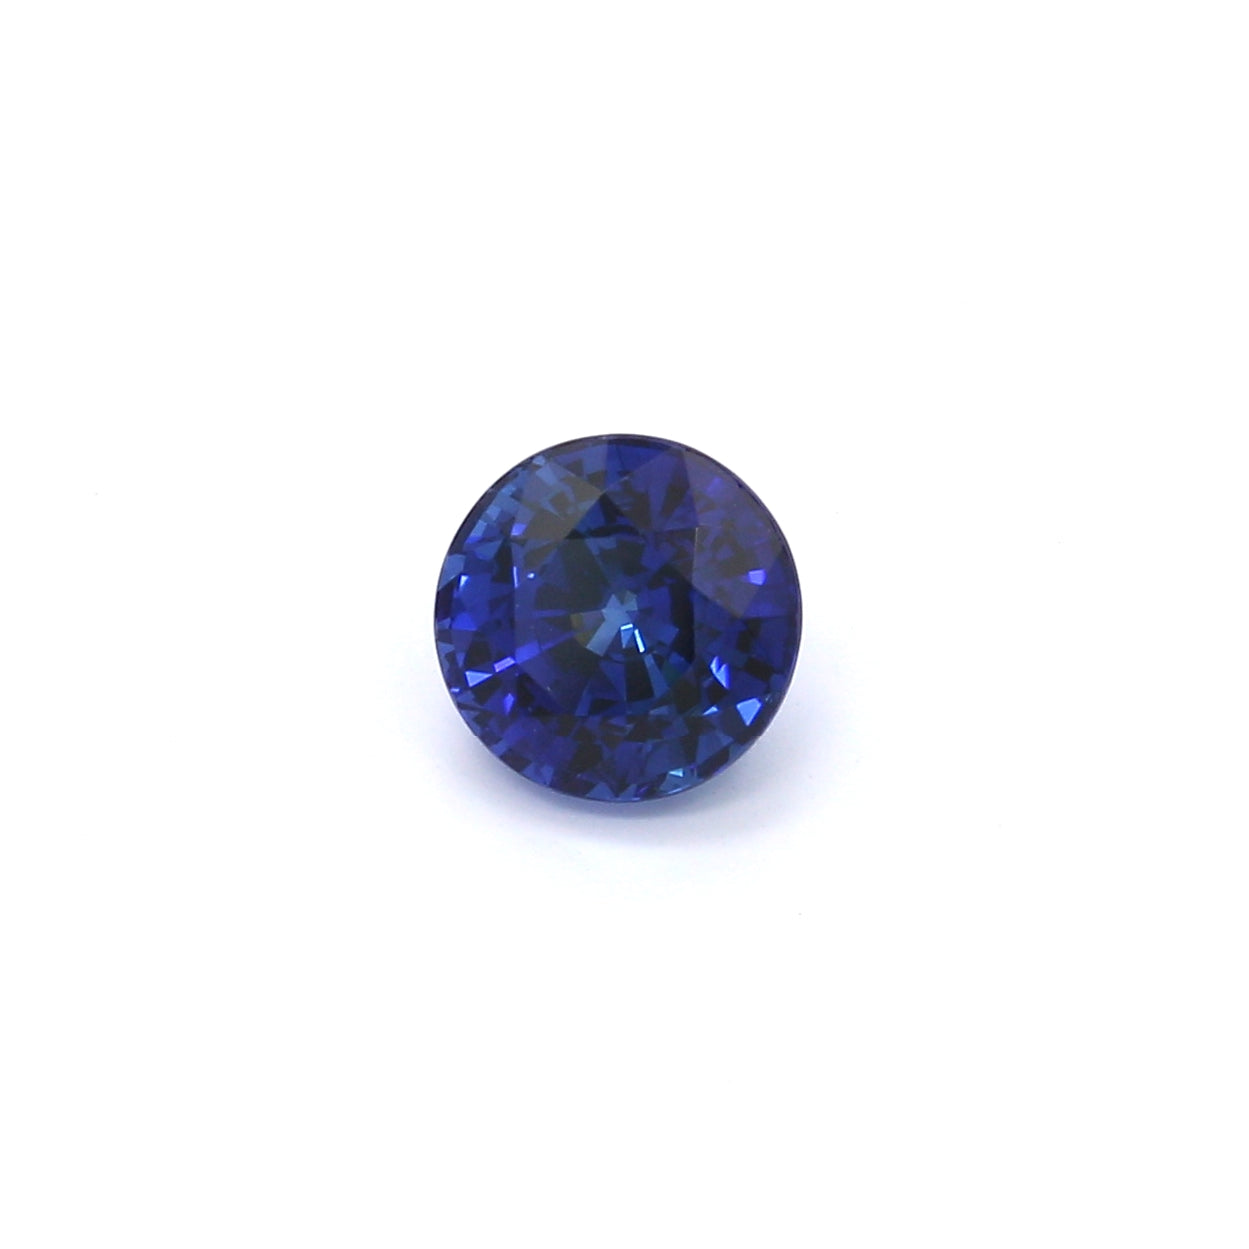 1.53ct Round Sapphire, Heated, Madagascar - 6.45 x 6.53 x 4.65mm